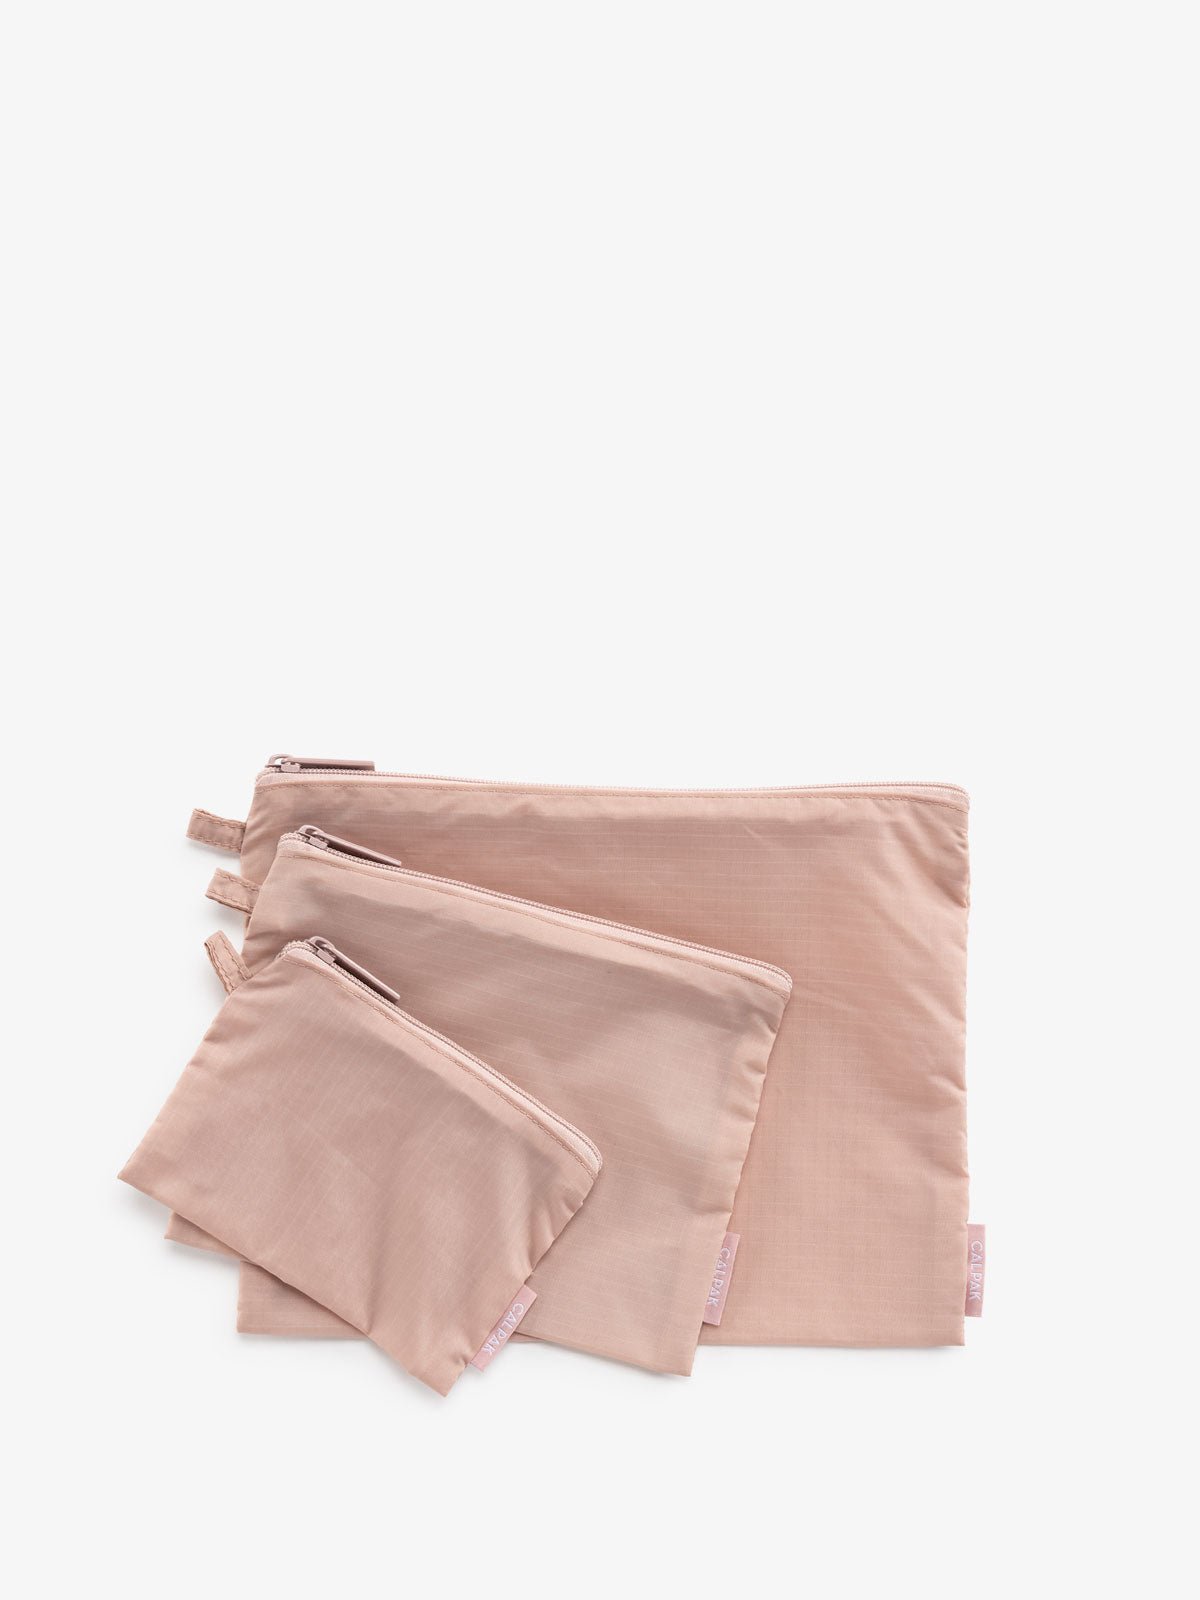 CALPAK pink pouches for purse organization